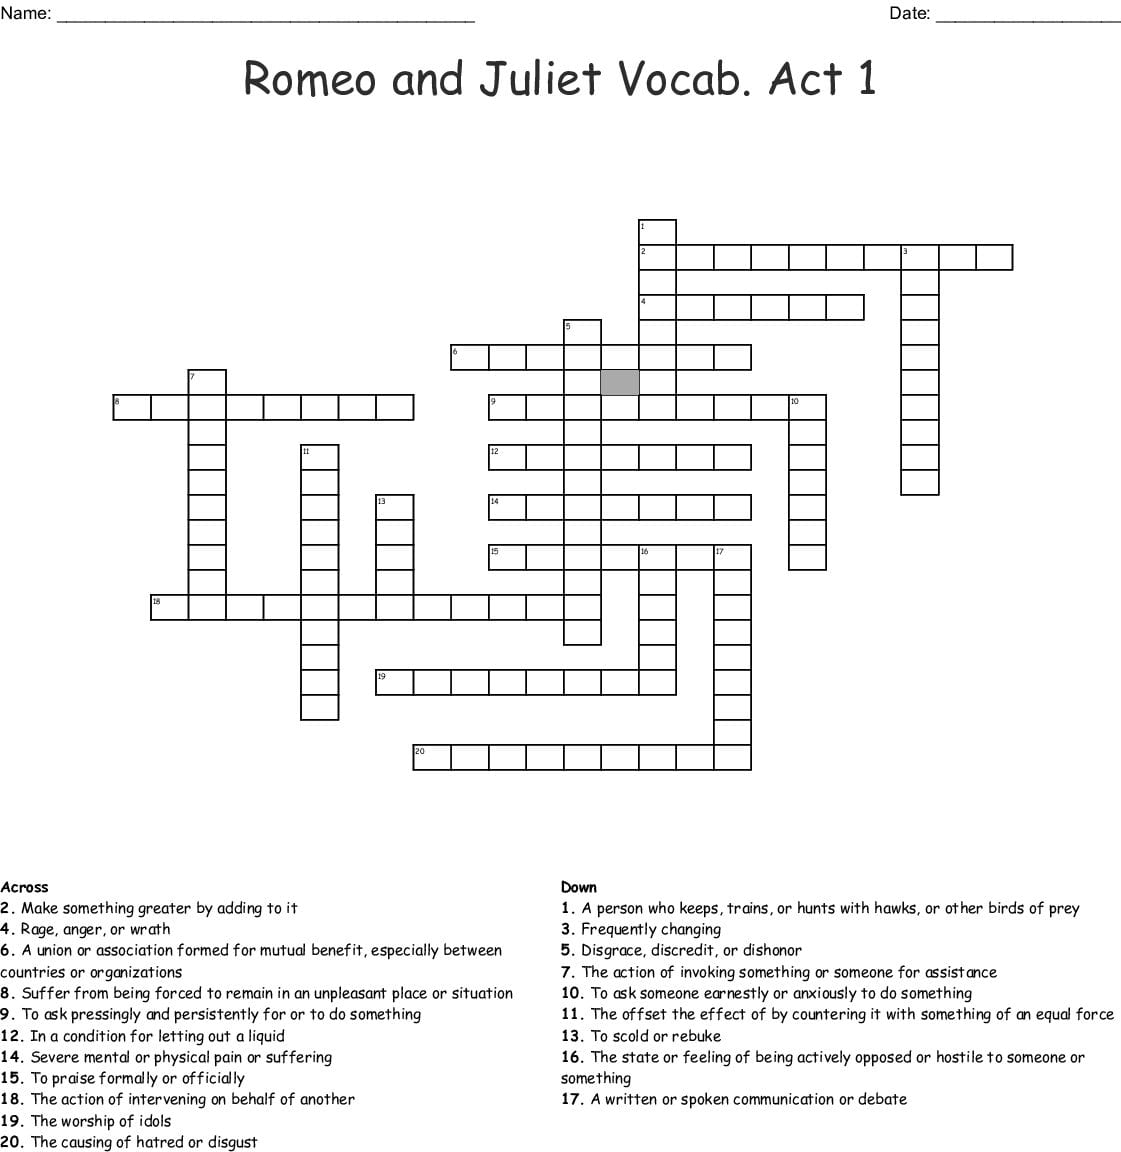 Romeo And Juliet Vocab Act 1 Crossword  Word